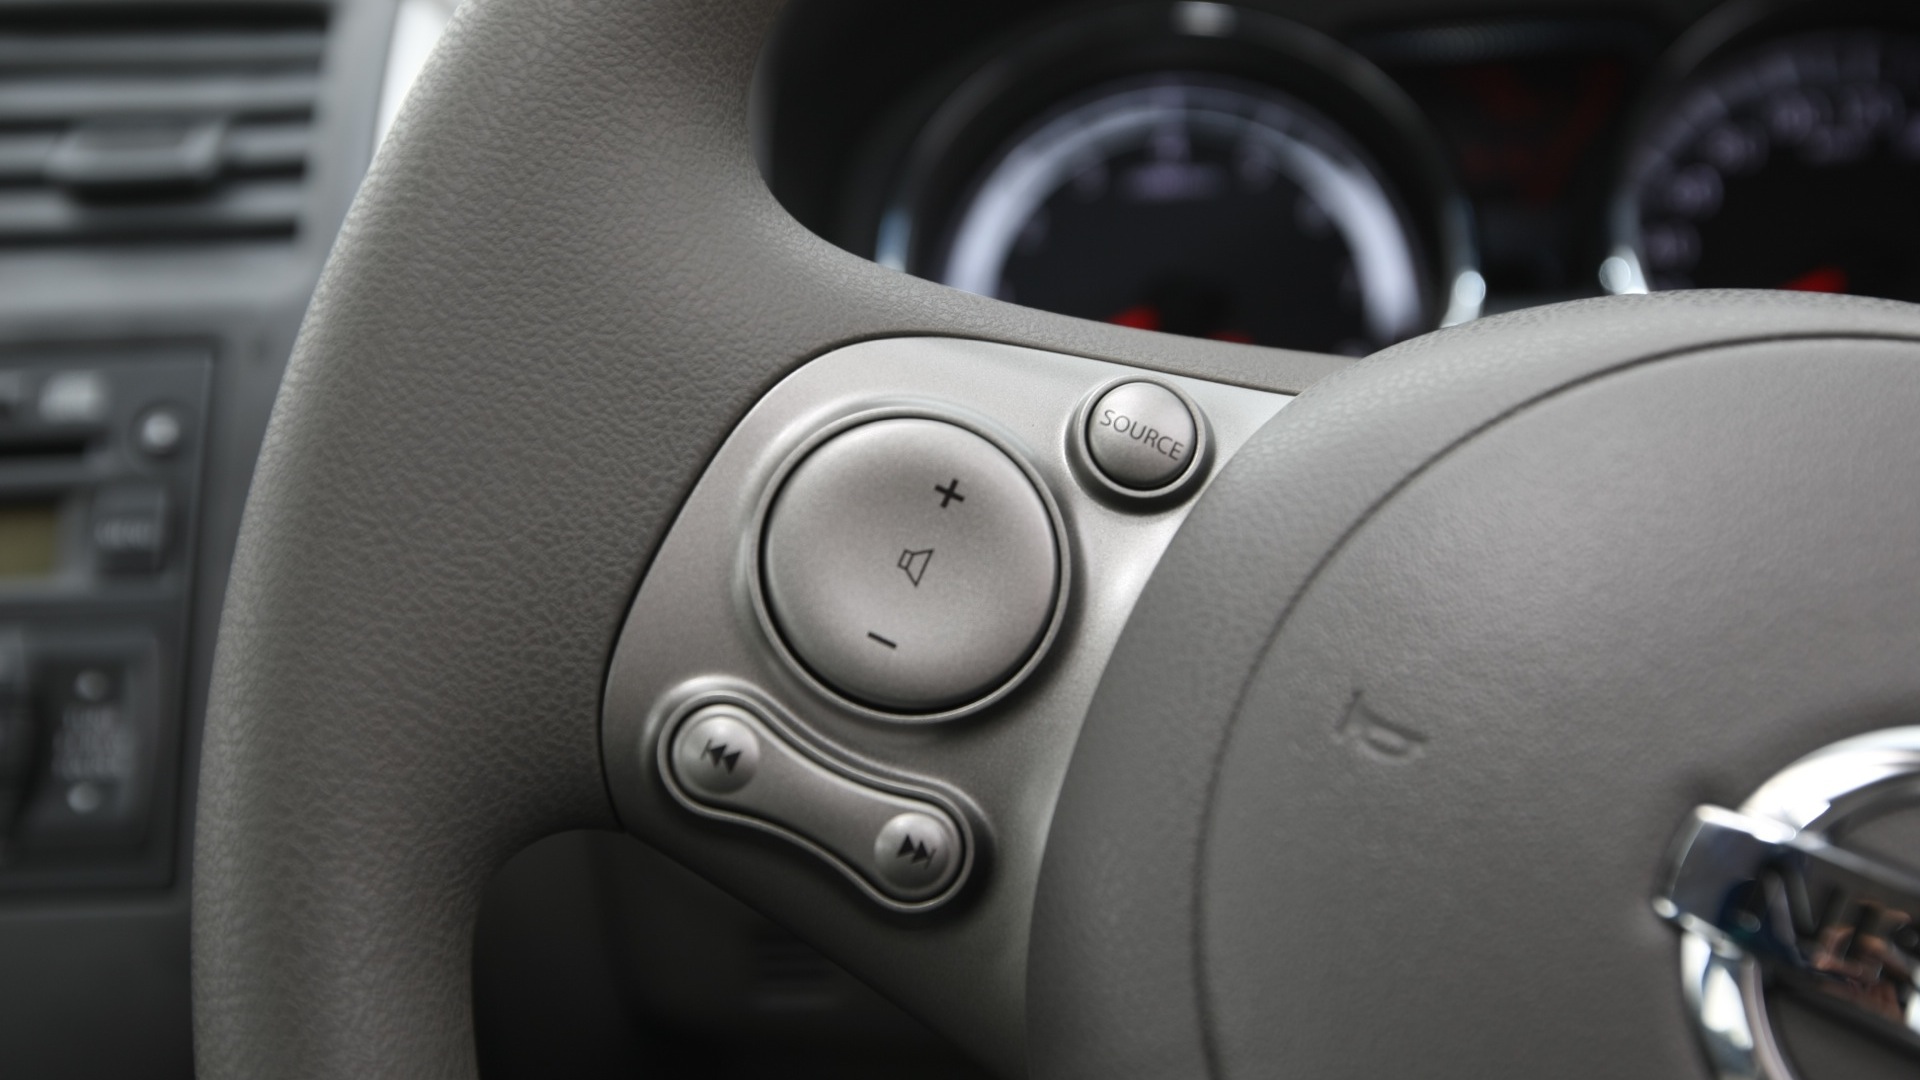 Nissan Sunny 2013 Xv Interior Car Photos Overdrive